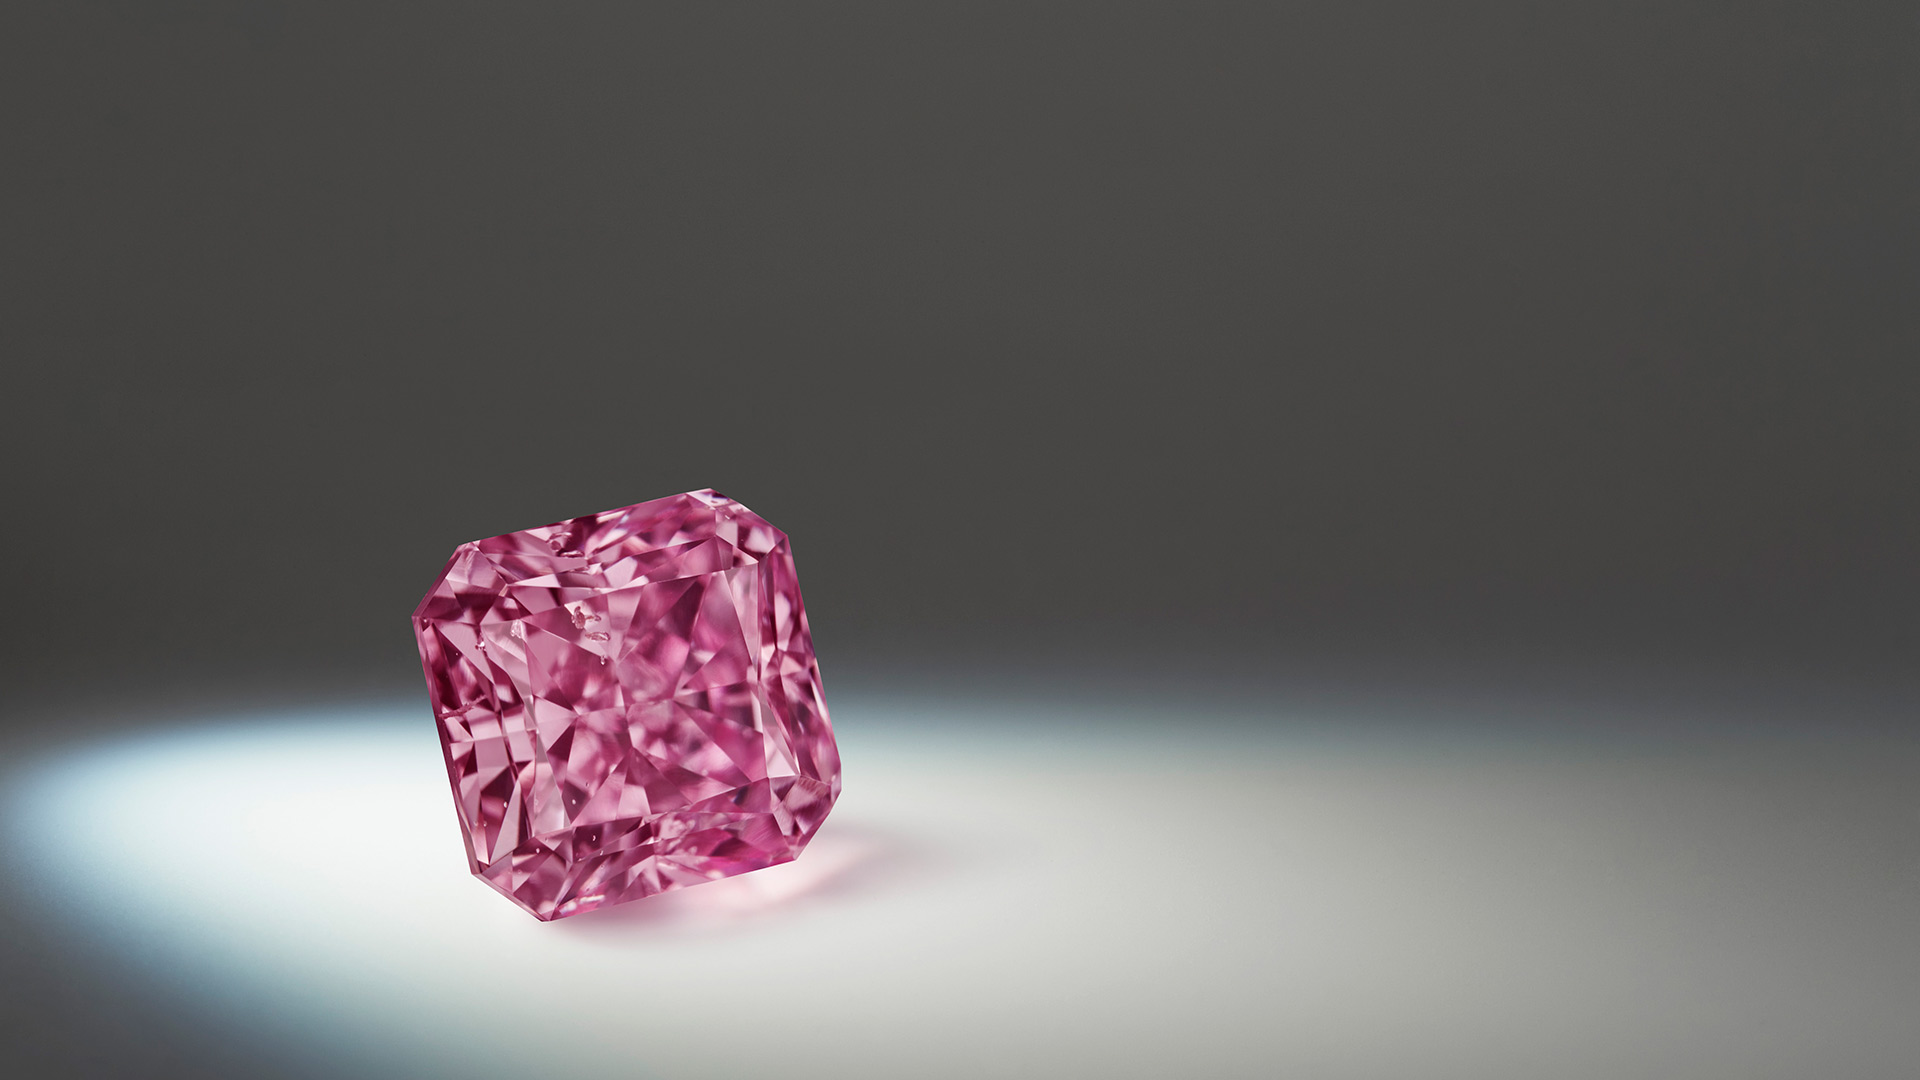 Lot 2, Argyle Stella™ a 1.79 carat, Fancy Vivid Purplish Pink, square radiant diamond